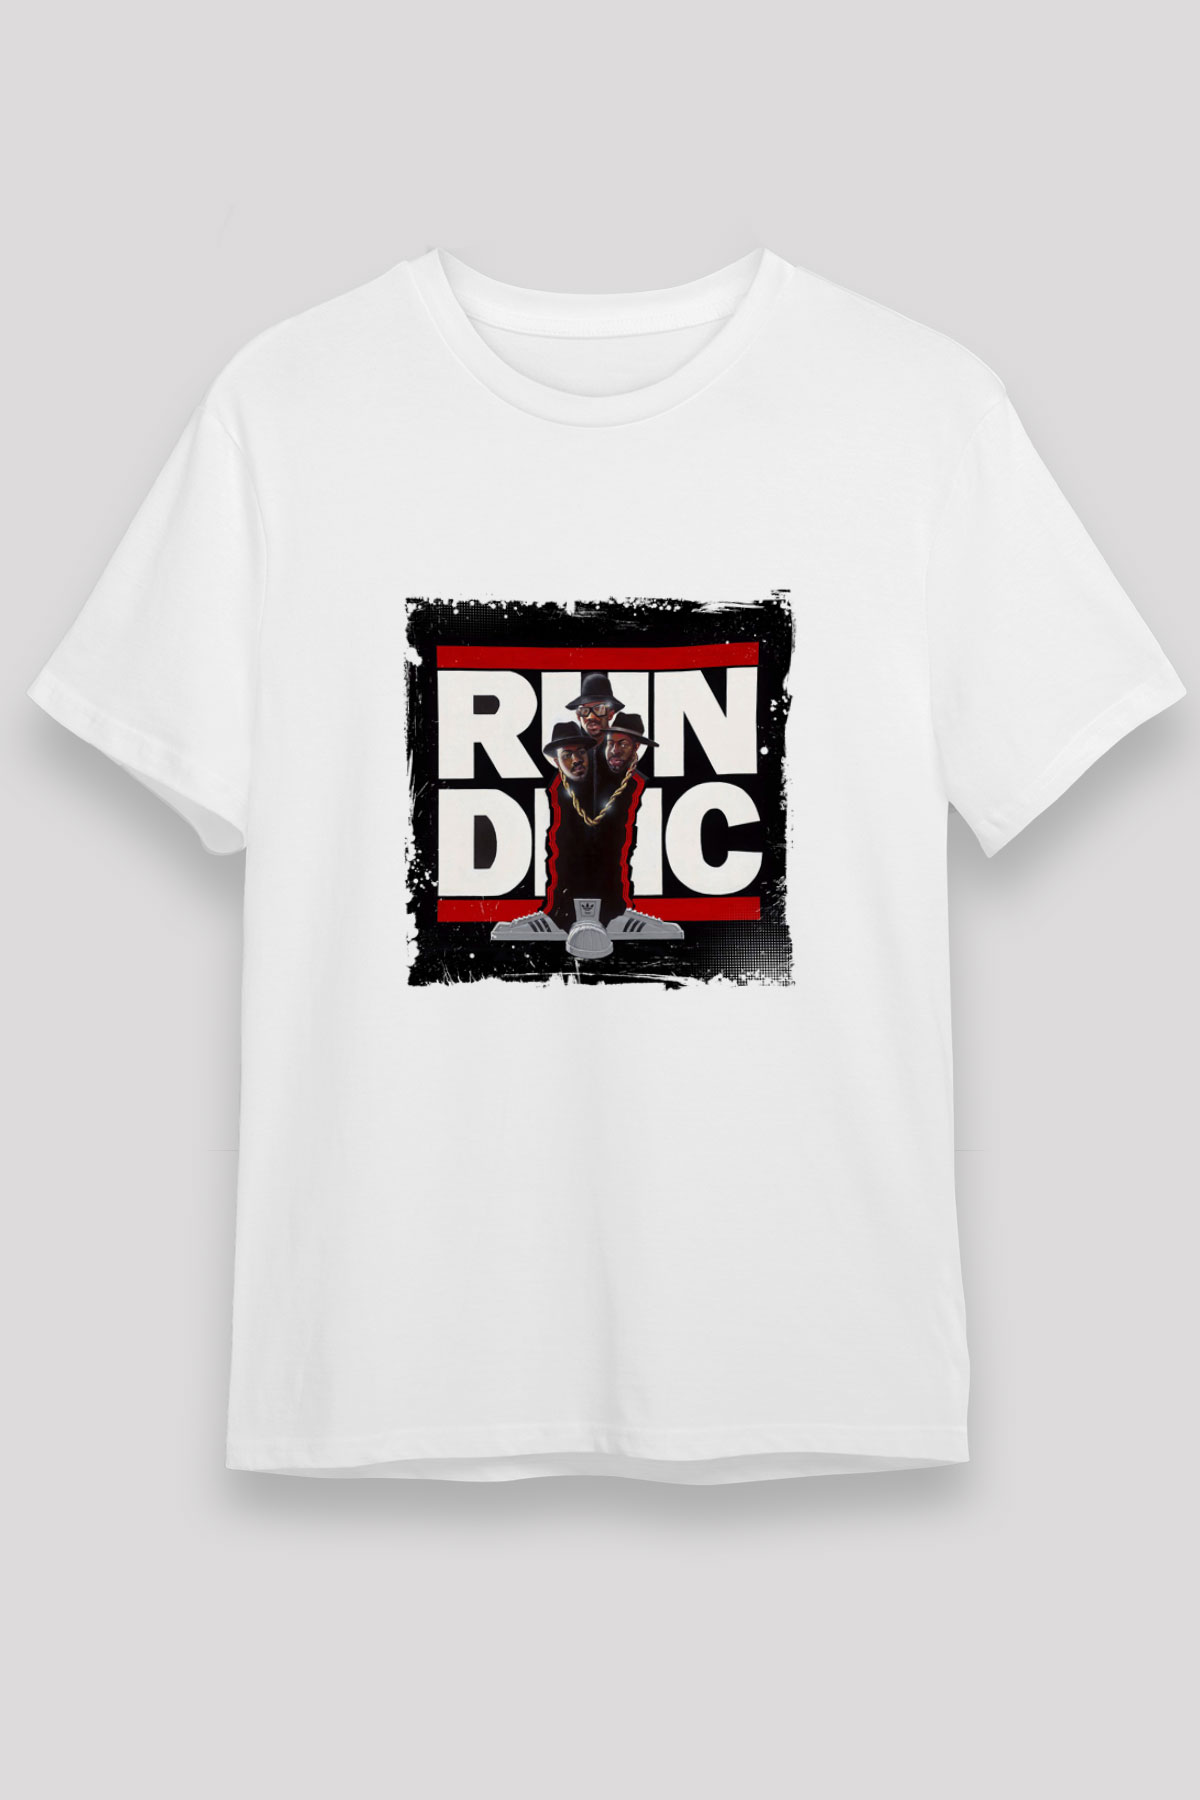 Run DMC T shirt,Hip Hop,Rap Tshirt 05/